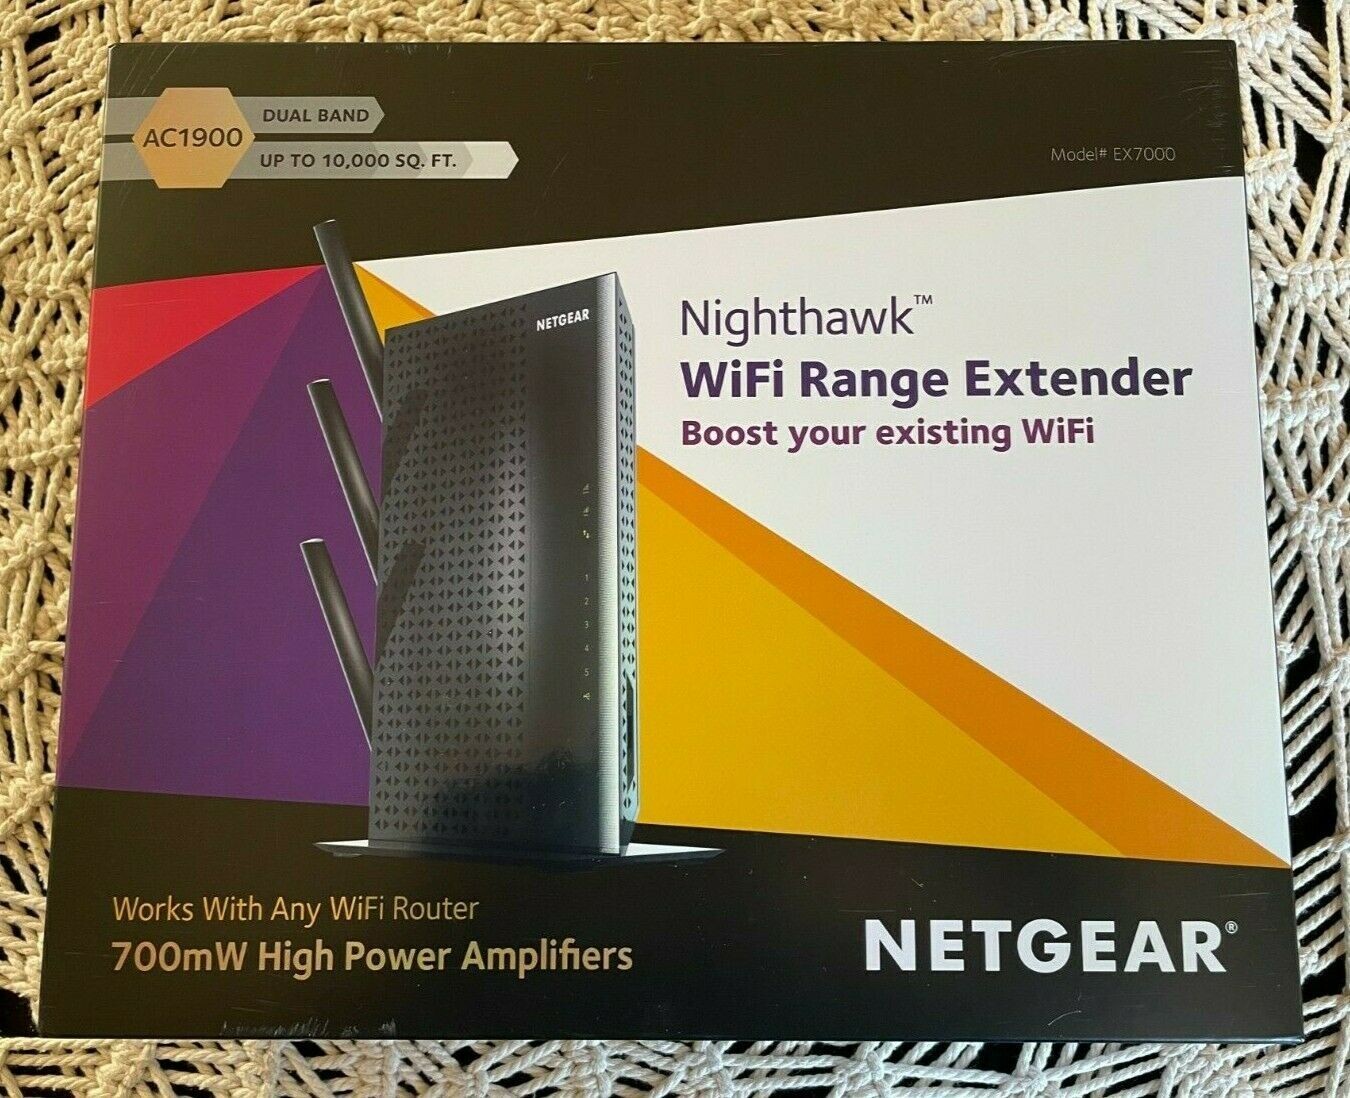 NETGEAR Nighthawk AC1900 Dual Band Gigabit WiFi Range Extender EX7000-100PAS